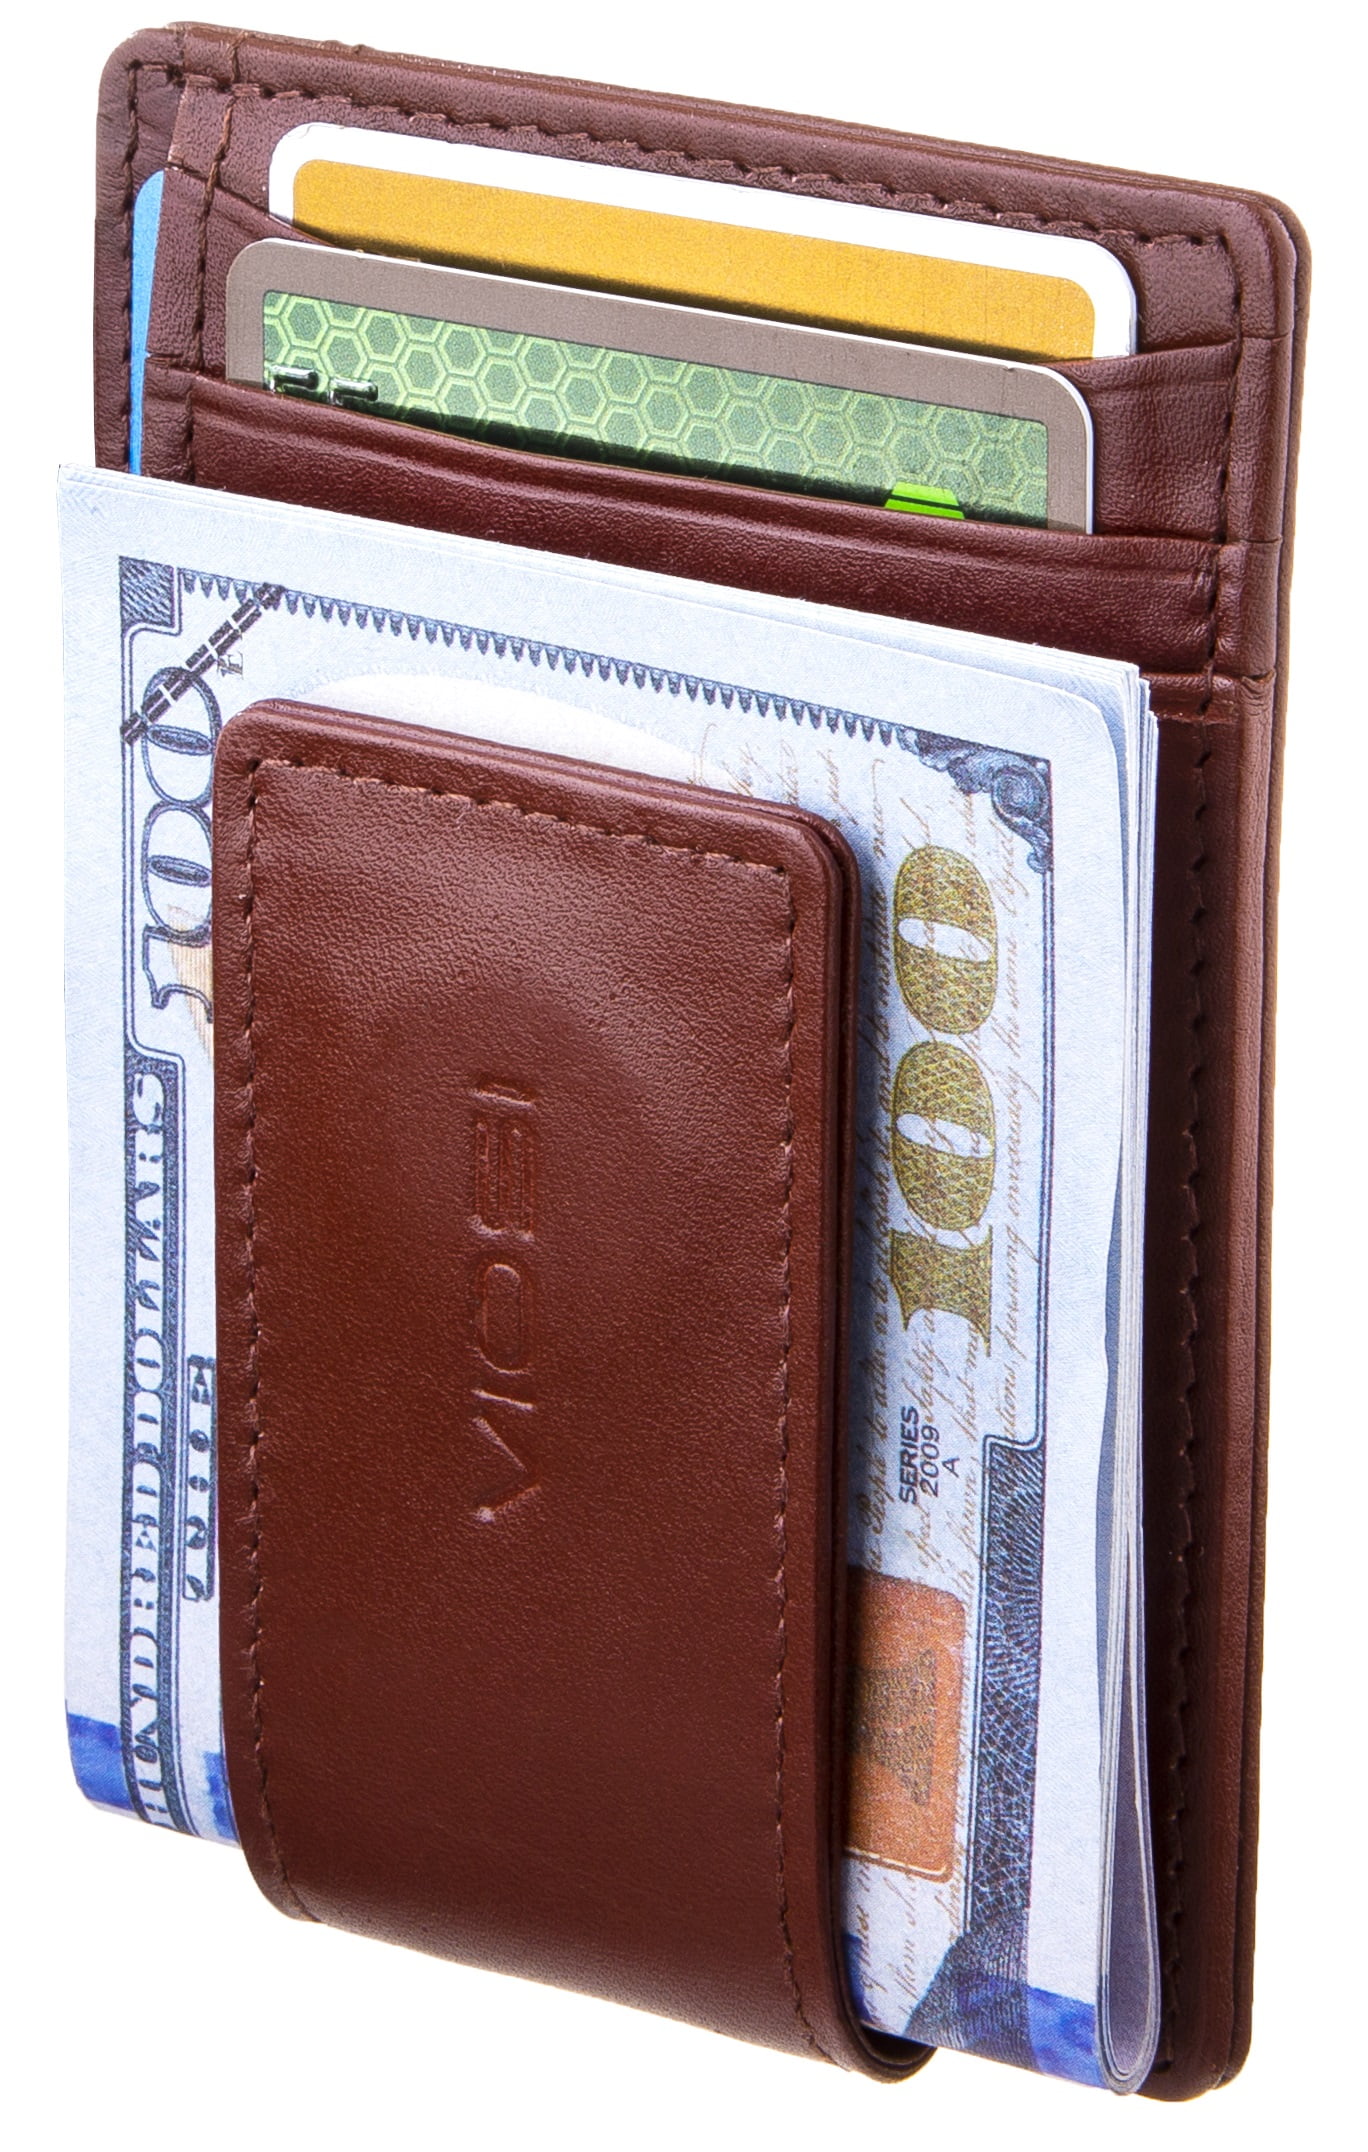 Slim Minimalist Leather Front Pocket Money Clip Wallet For Men RFID Blocking Credit Cards Holder With Strong Magnet